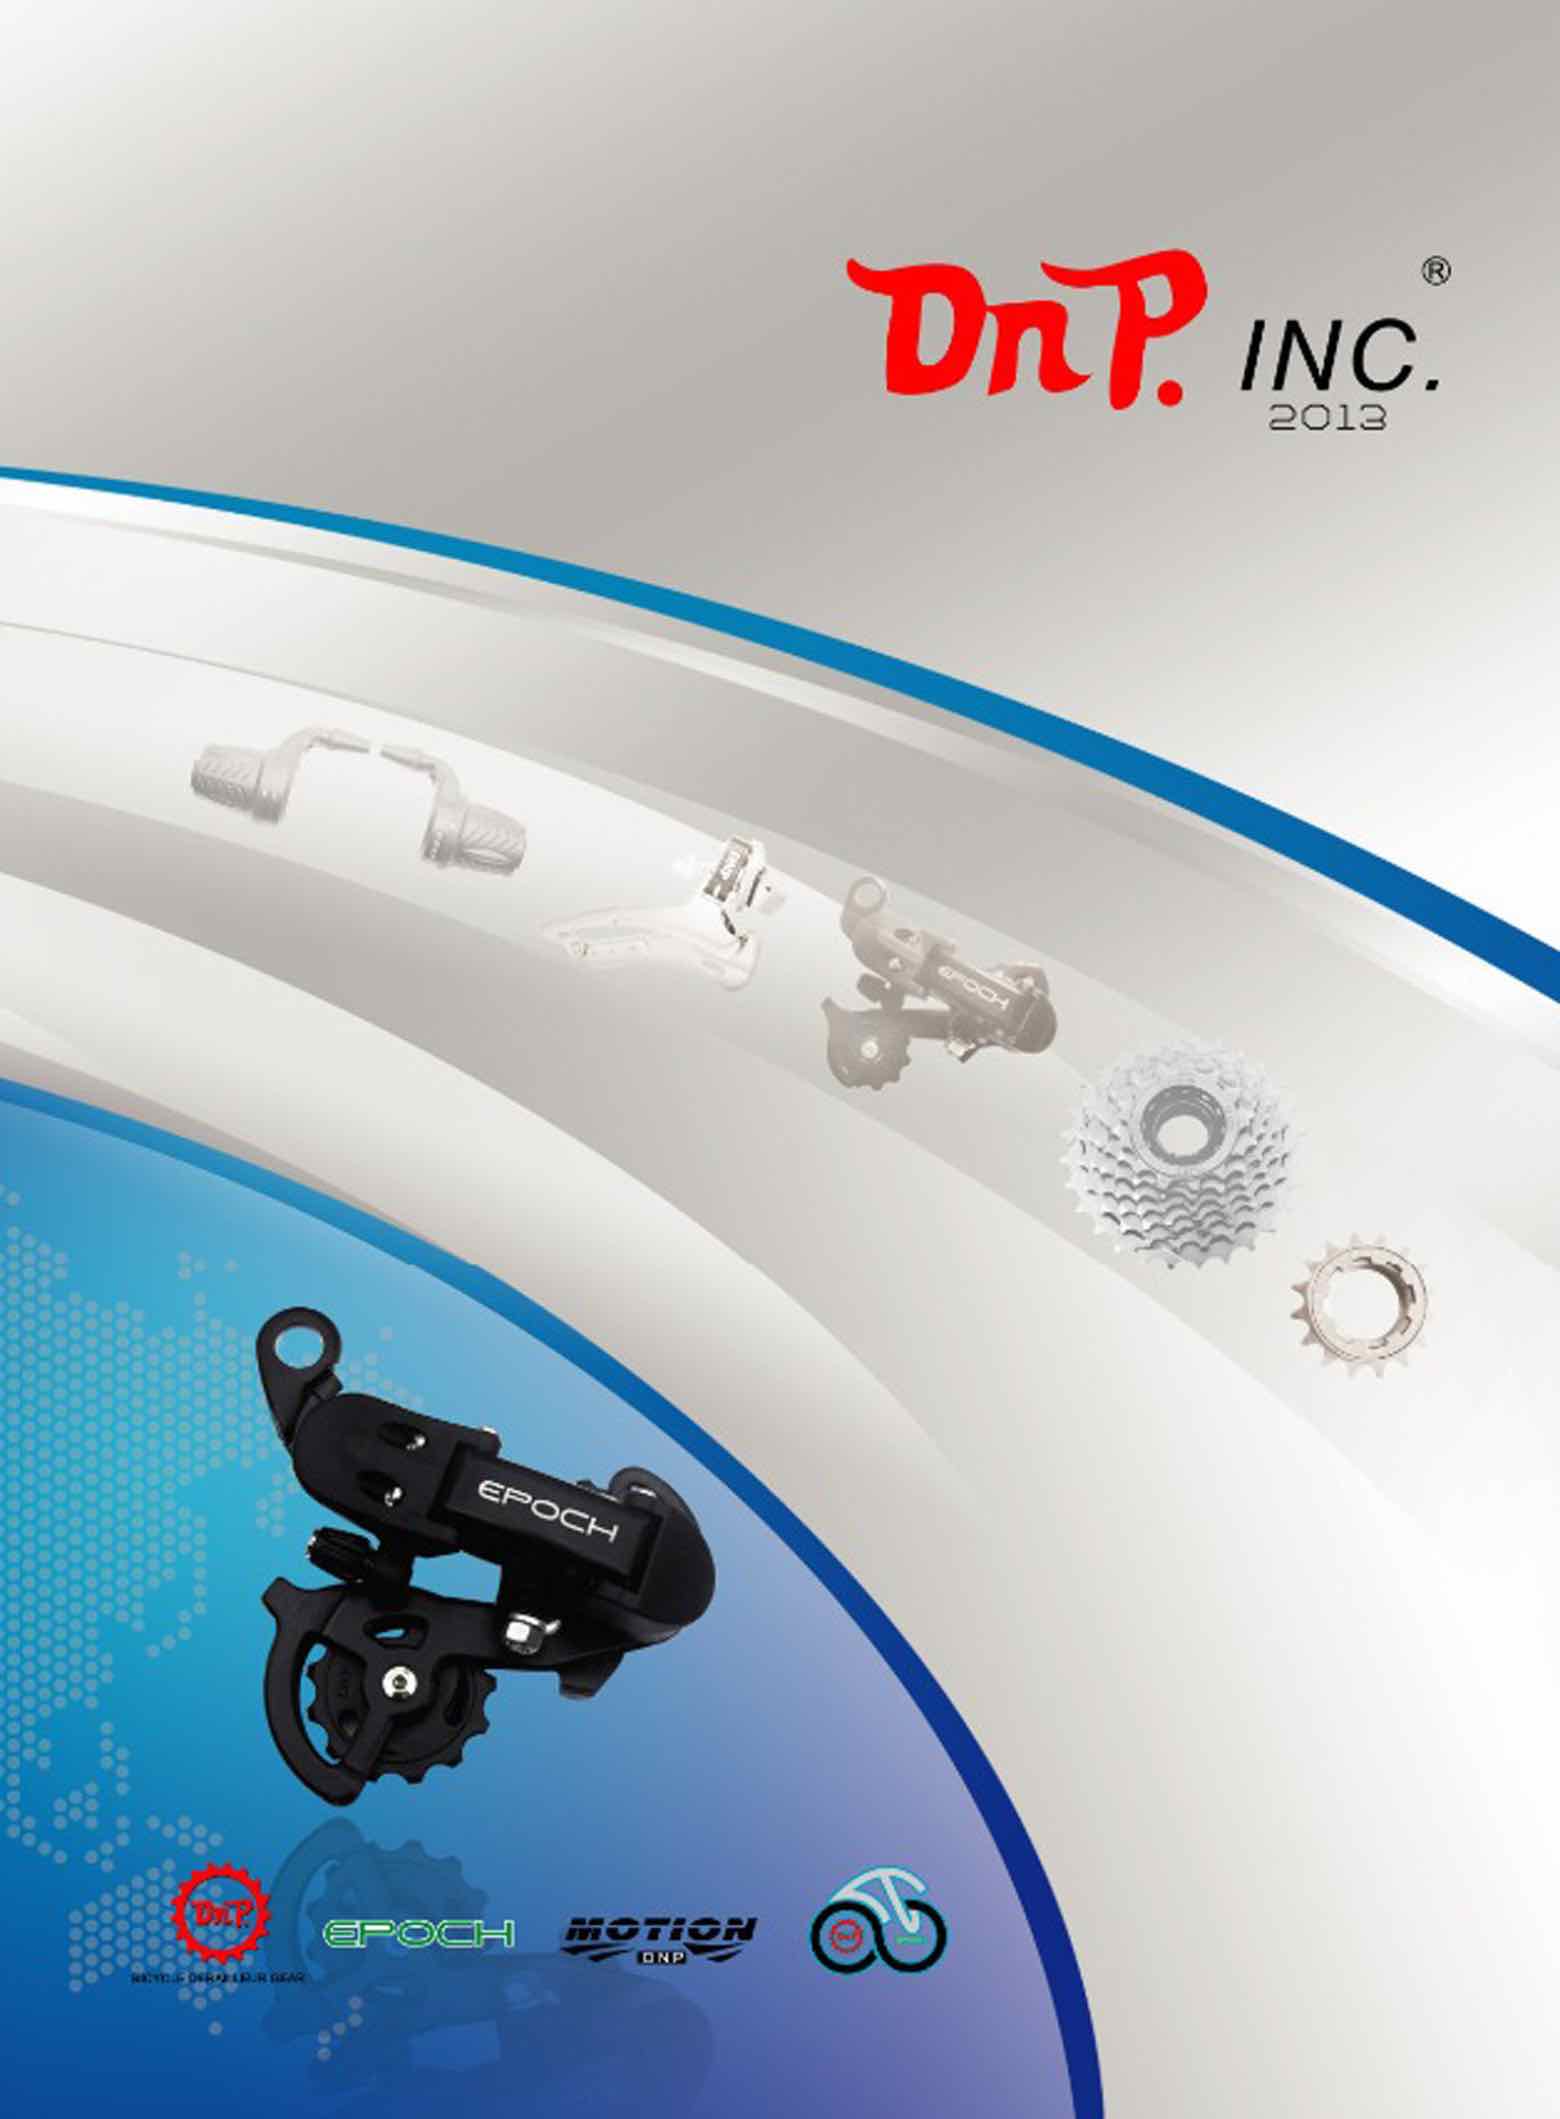 DNP pdf catalog 2013 - front cover main image